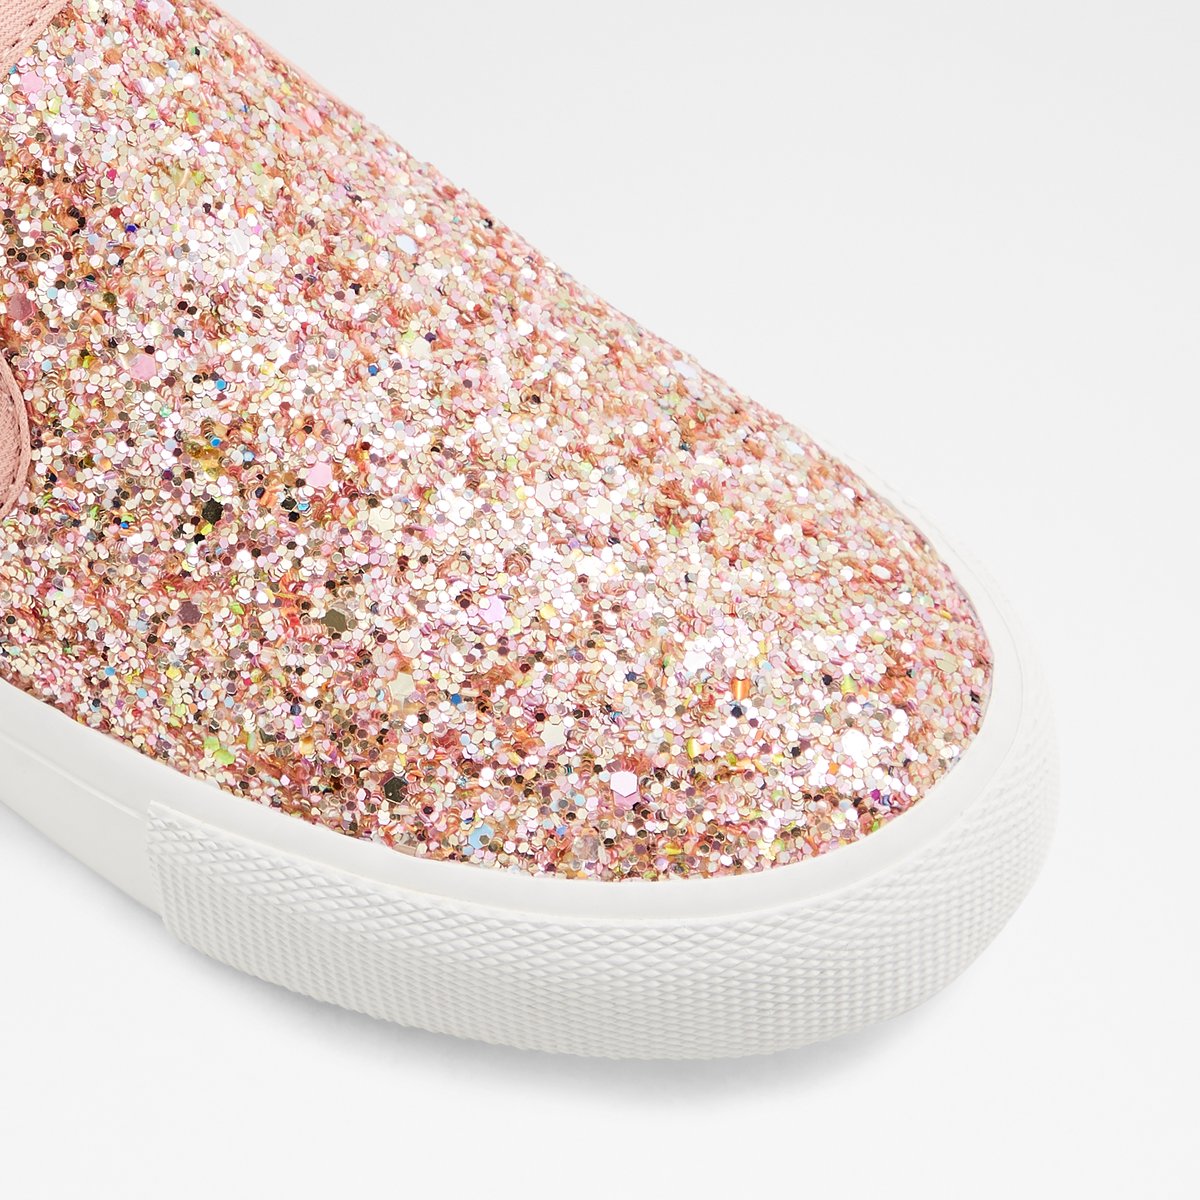 aldo glitter shoes